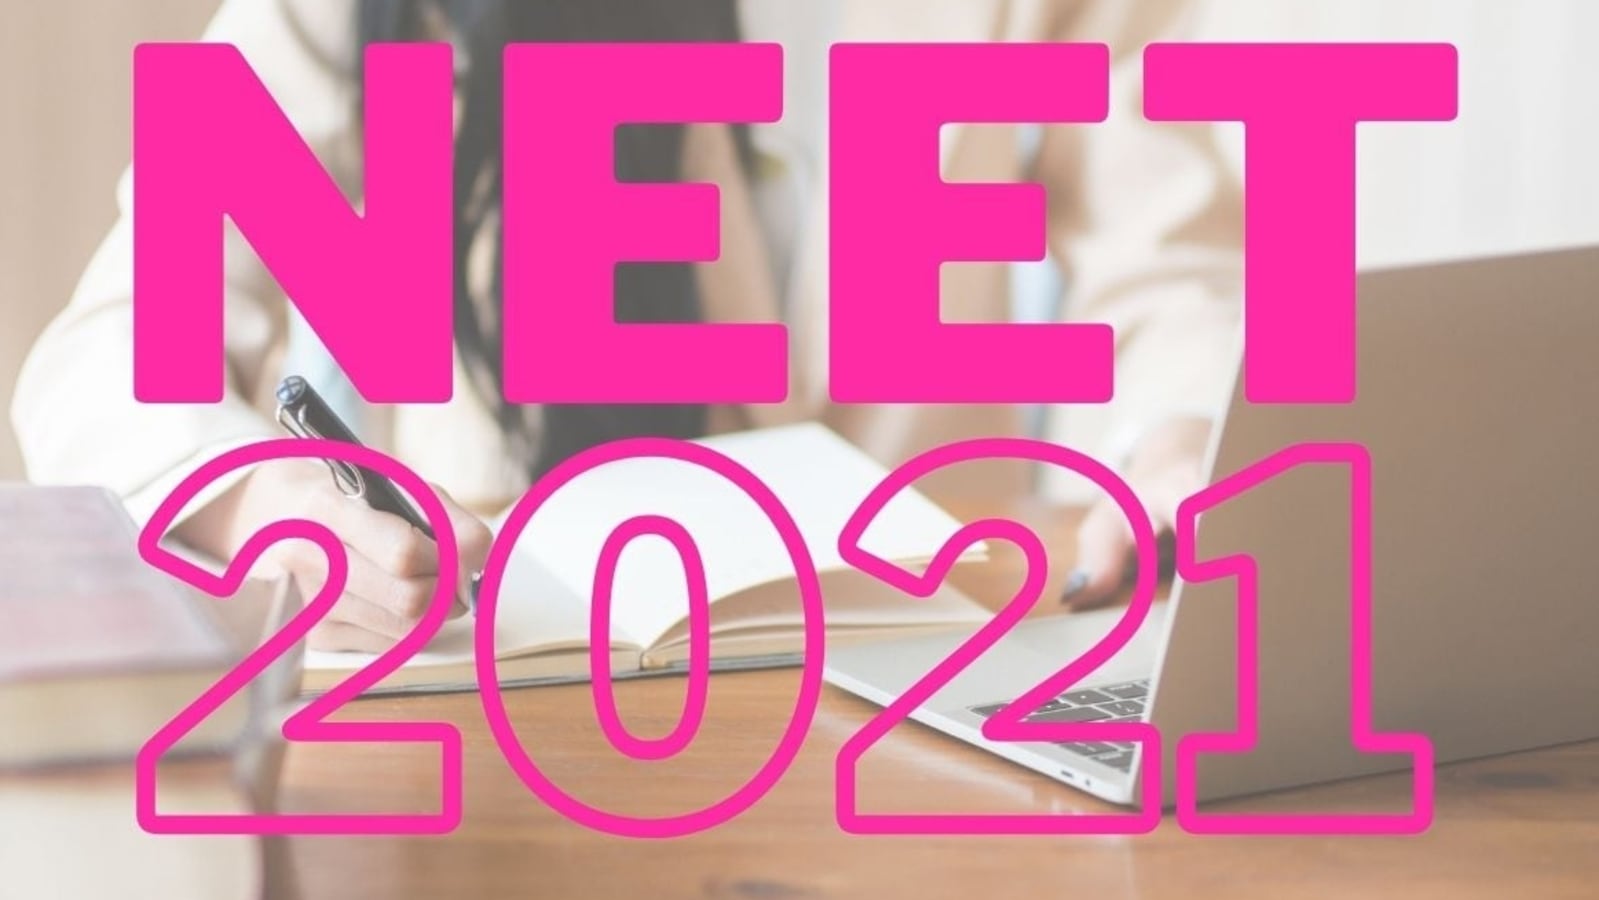 NEET 2021 registration begins today: Live updates on exam pattern, other details